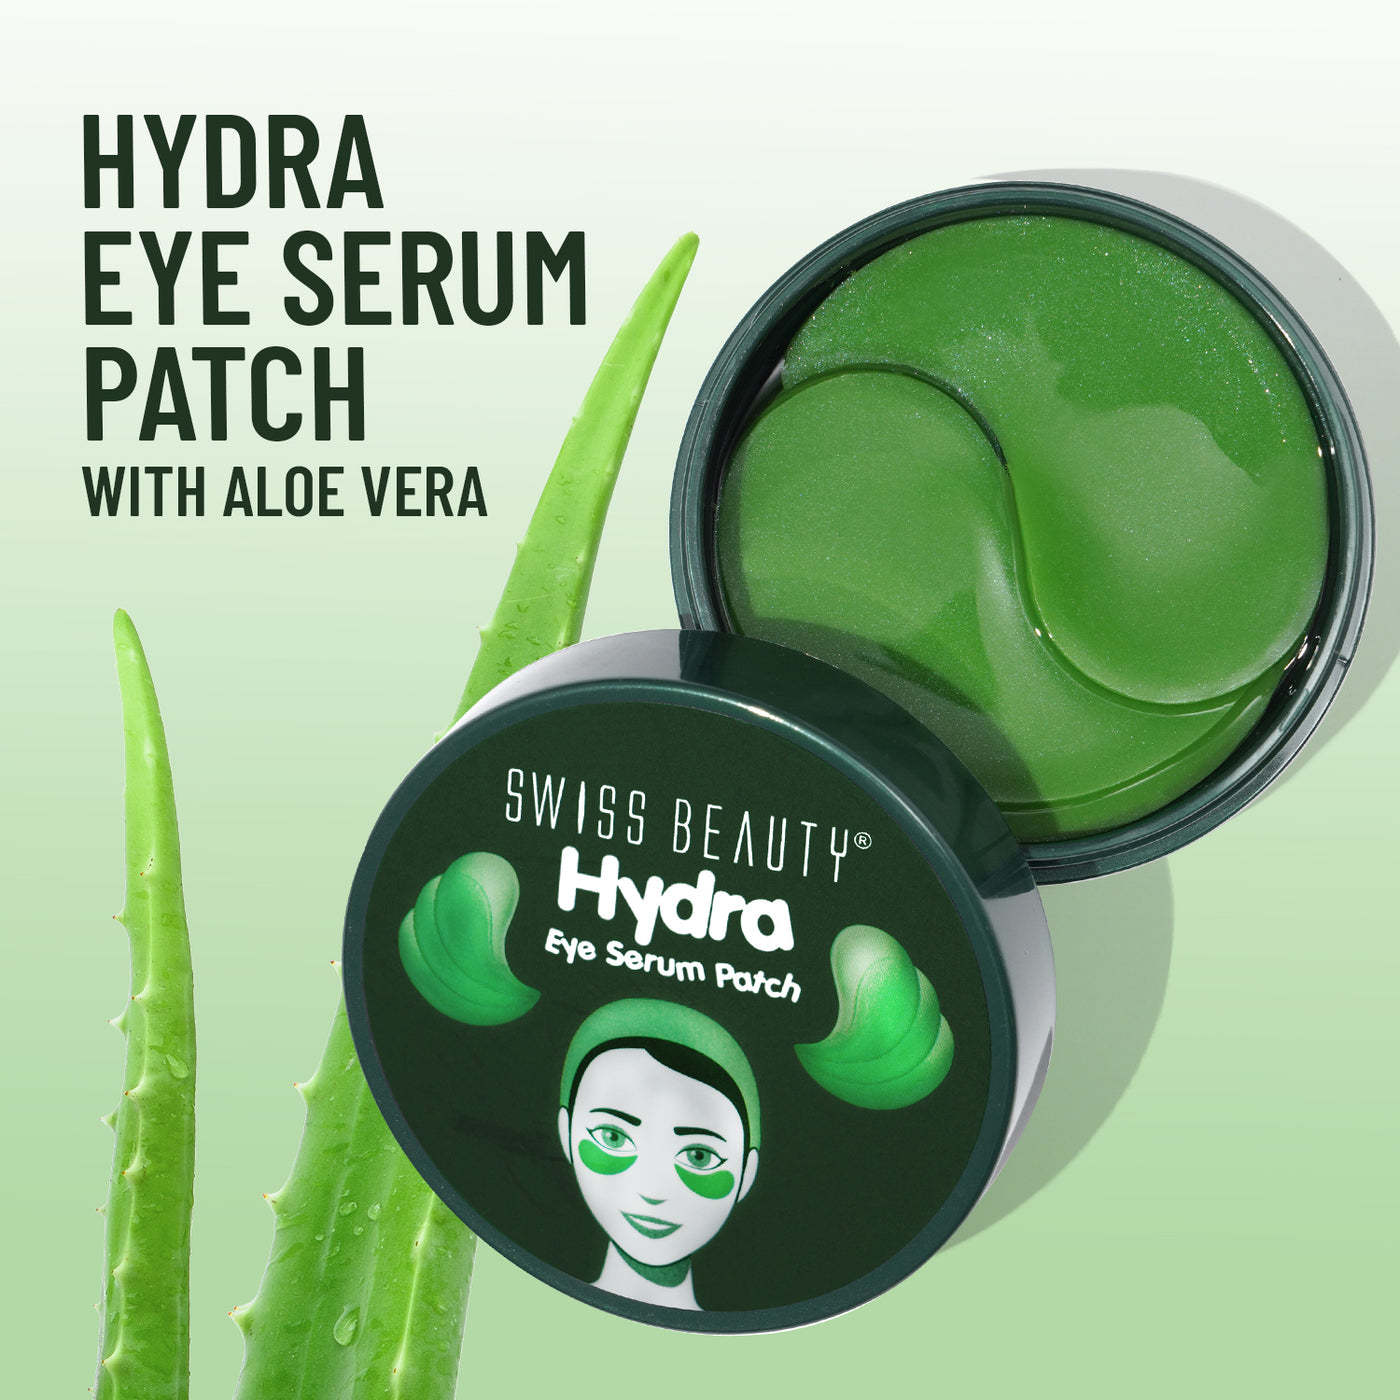 Hydra Eye Serum Patch with Aloe Vera